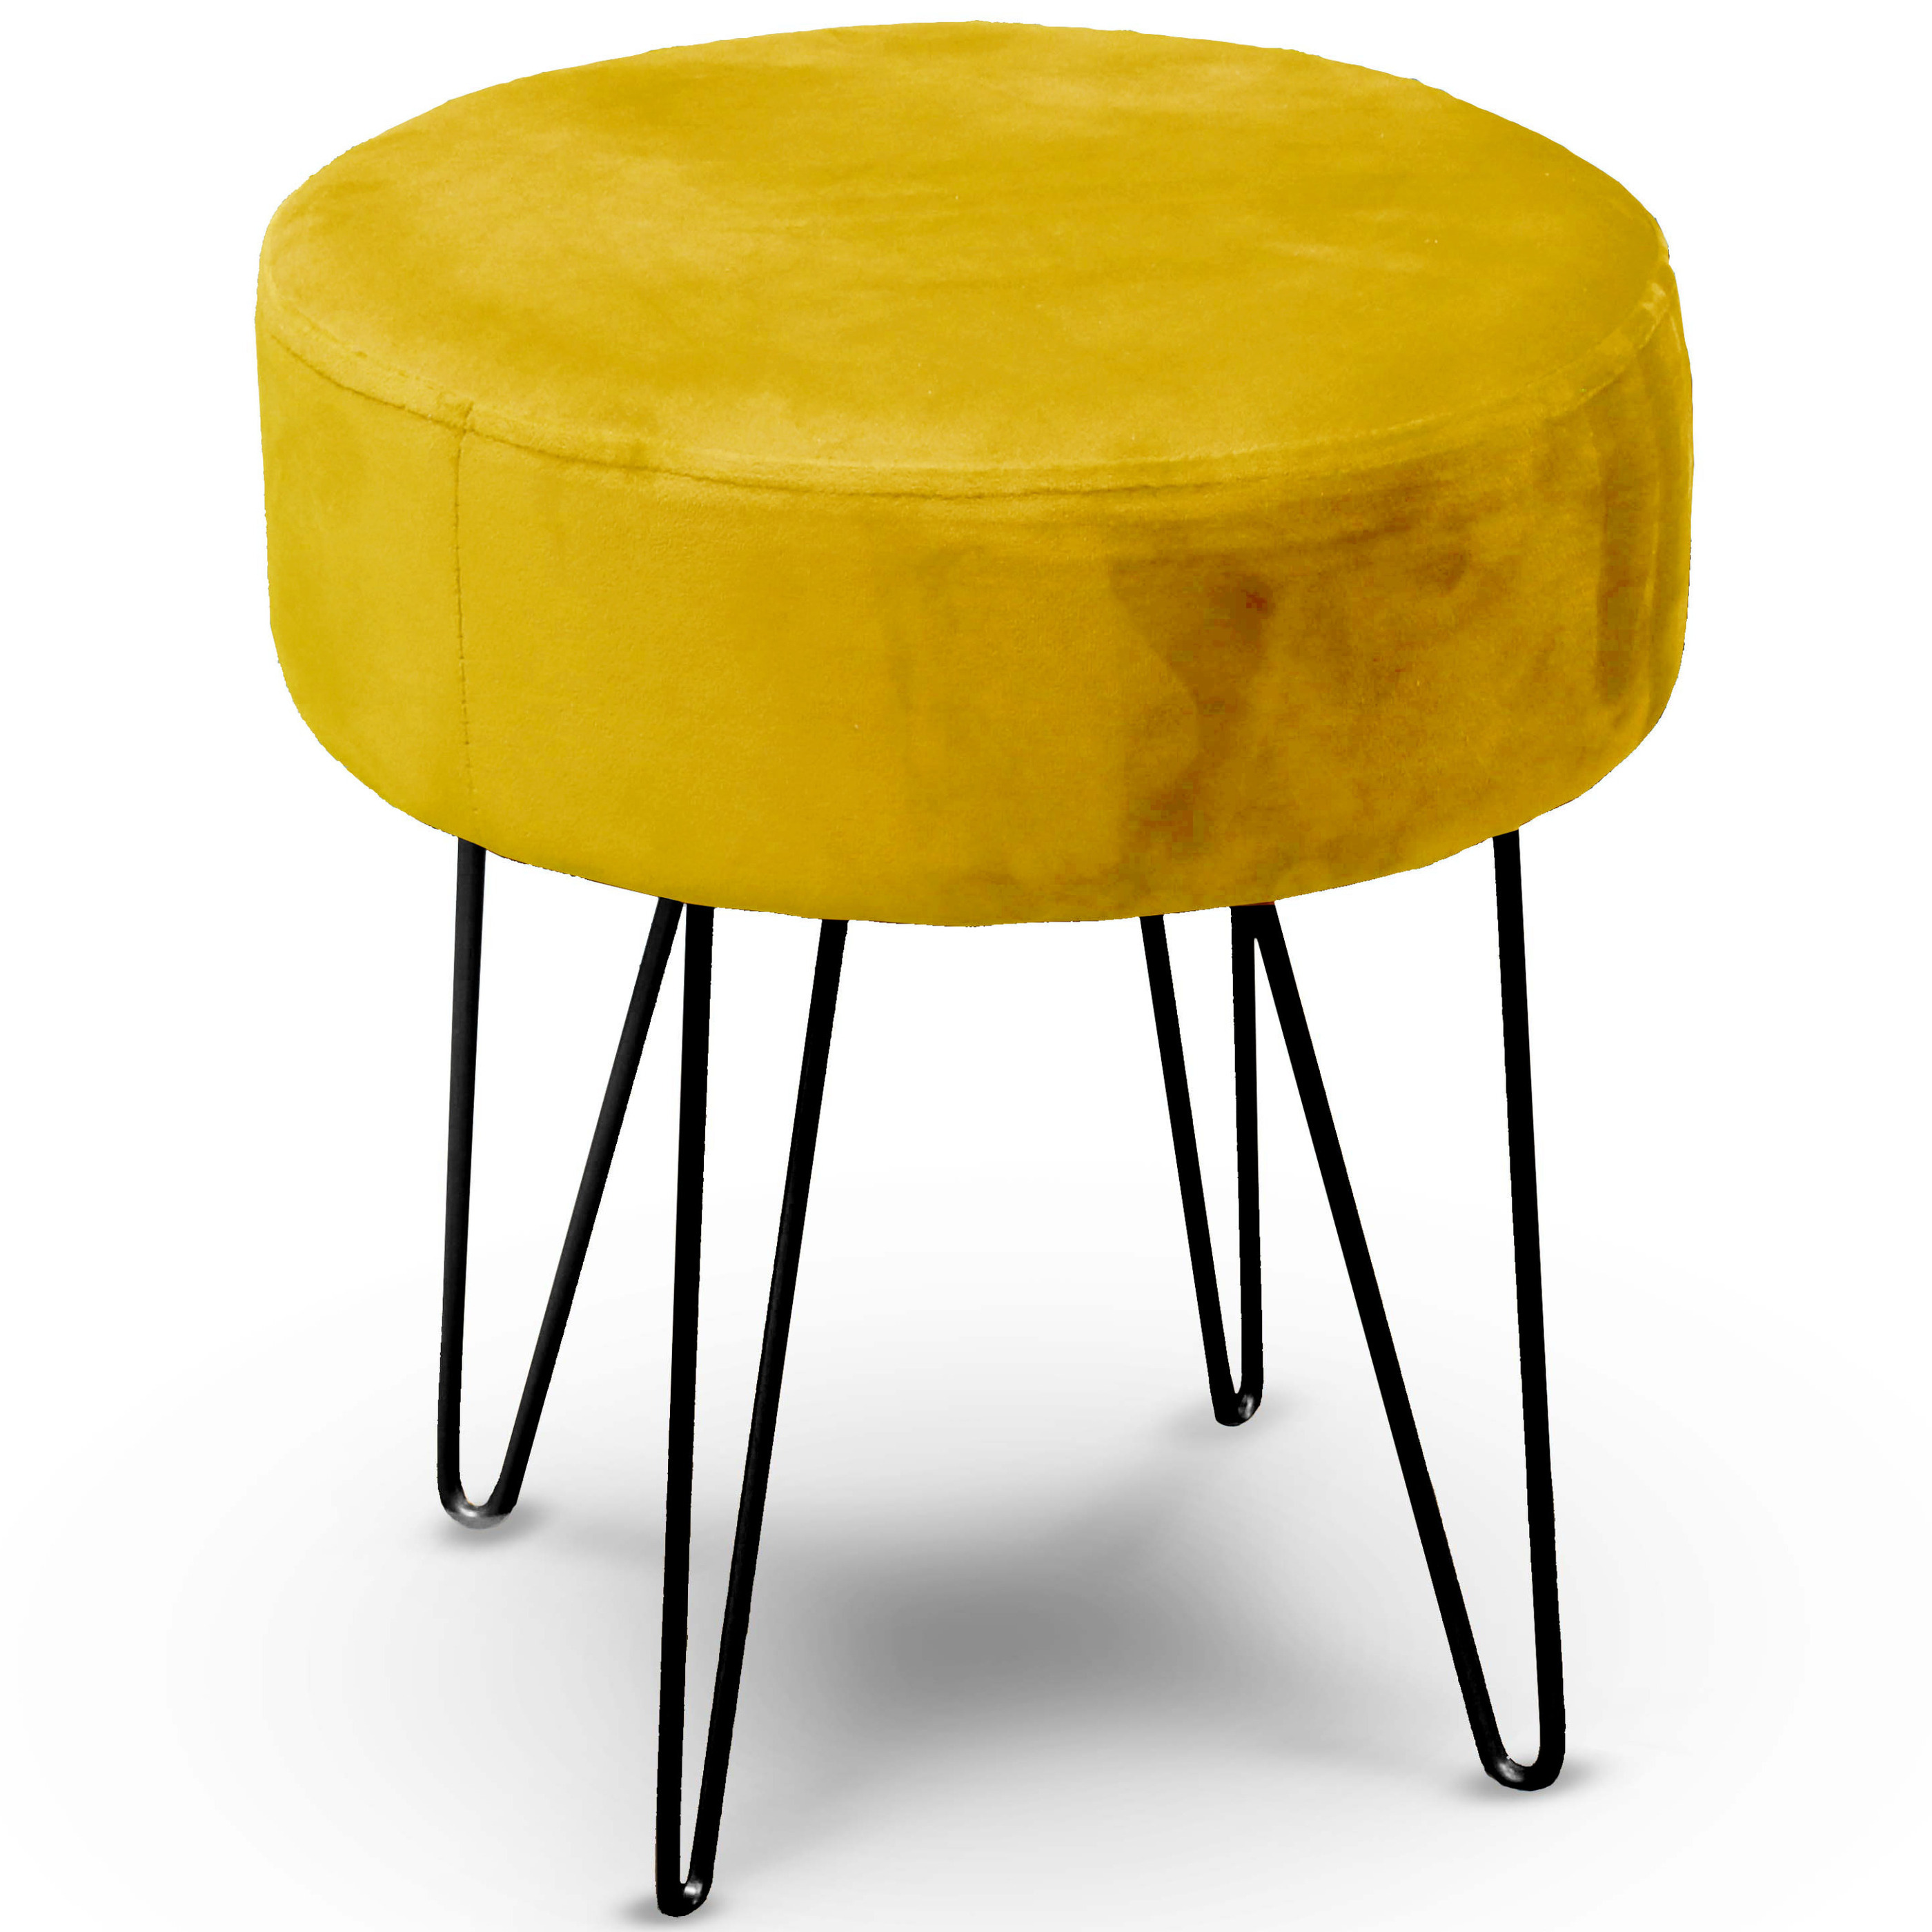 Velvet kruk Davy - oker geel - metaal/stof - D35 x H40 cm - bijzet stoeltjes